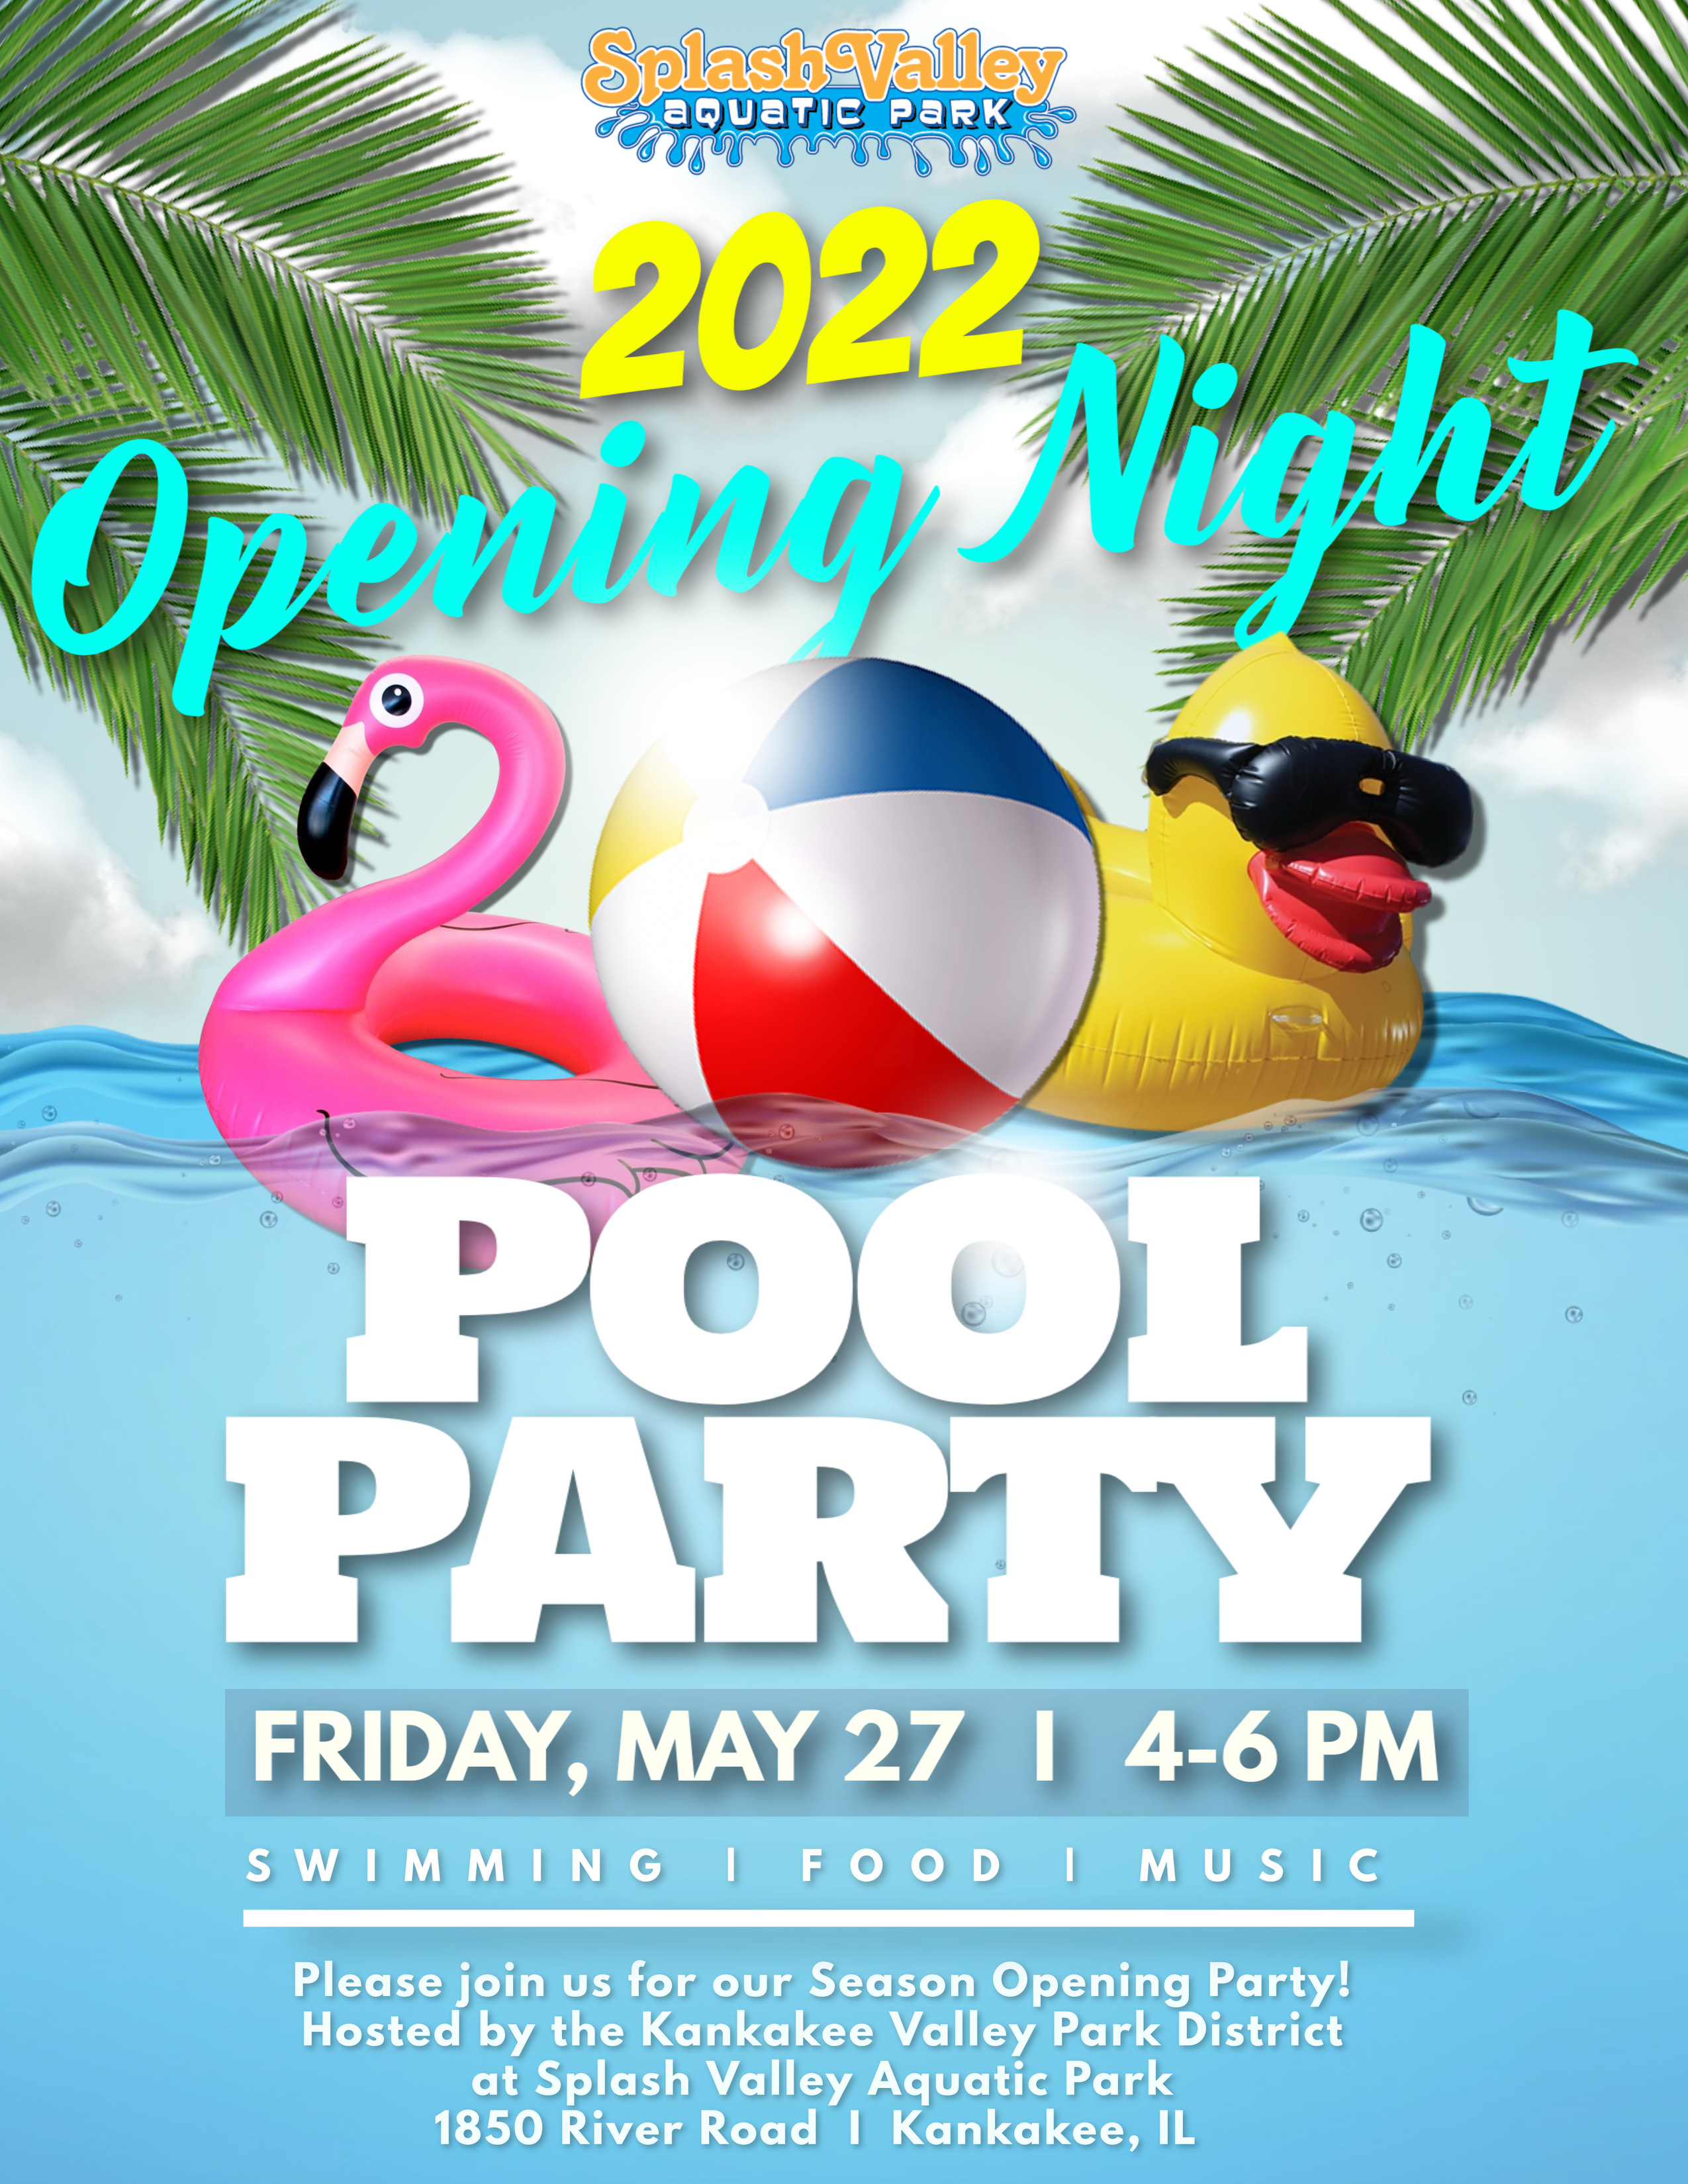 Splash Valley Aquatic Park's Opening Night Pool Party